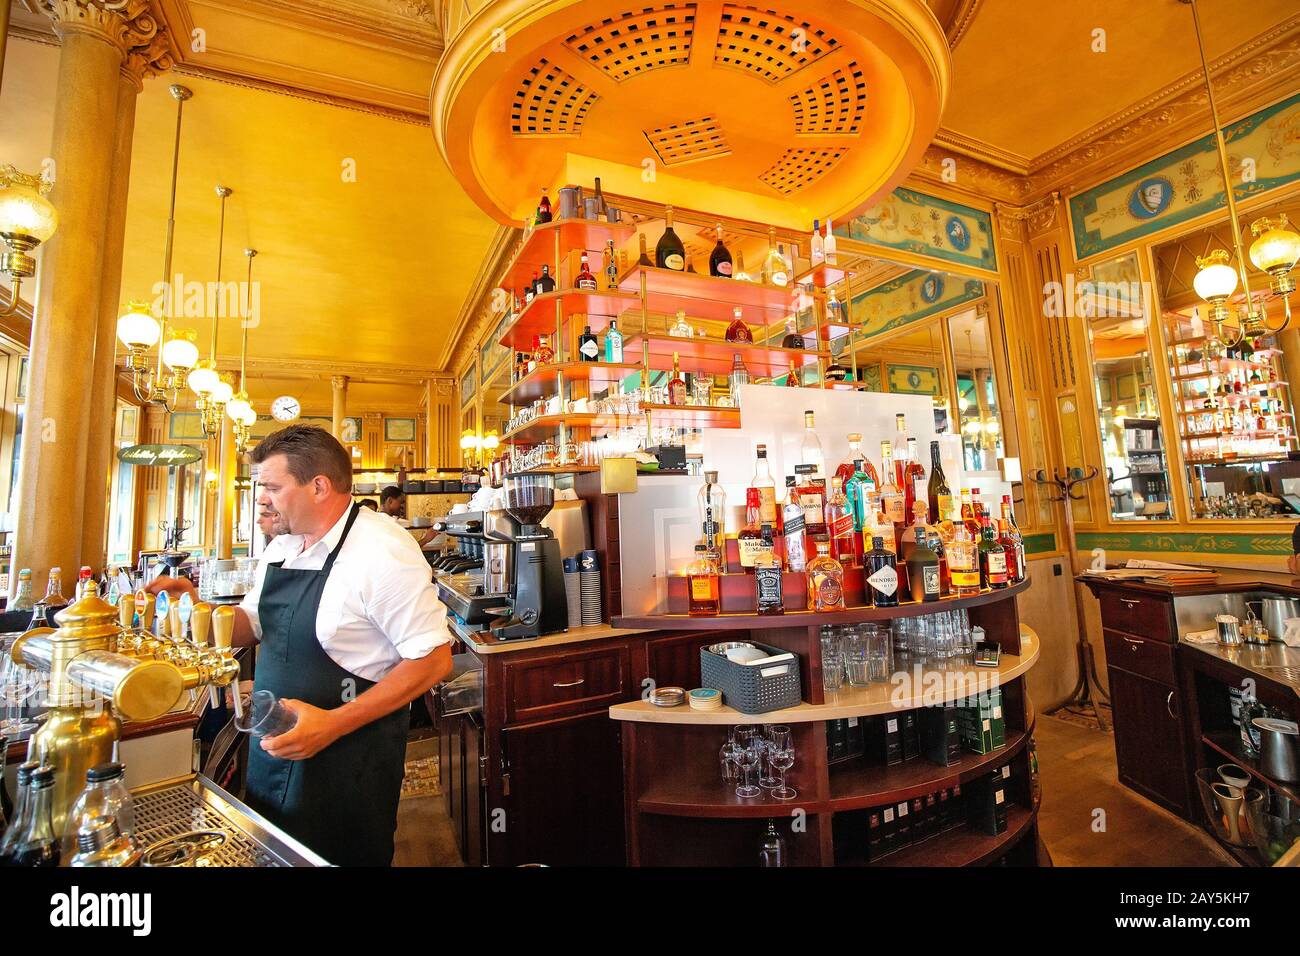 26 July 2019, Paris, France: Barman serving alcohol cocktails in retro bar. Stock Photo